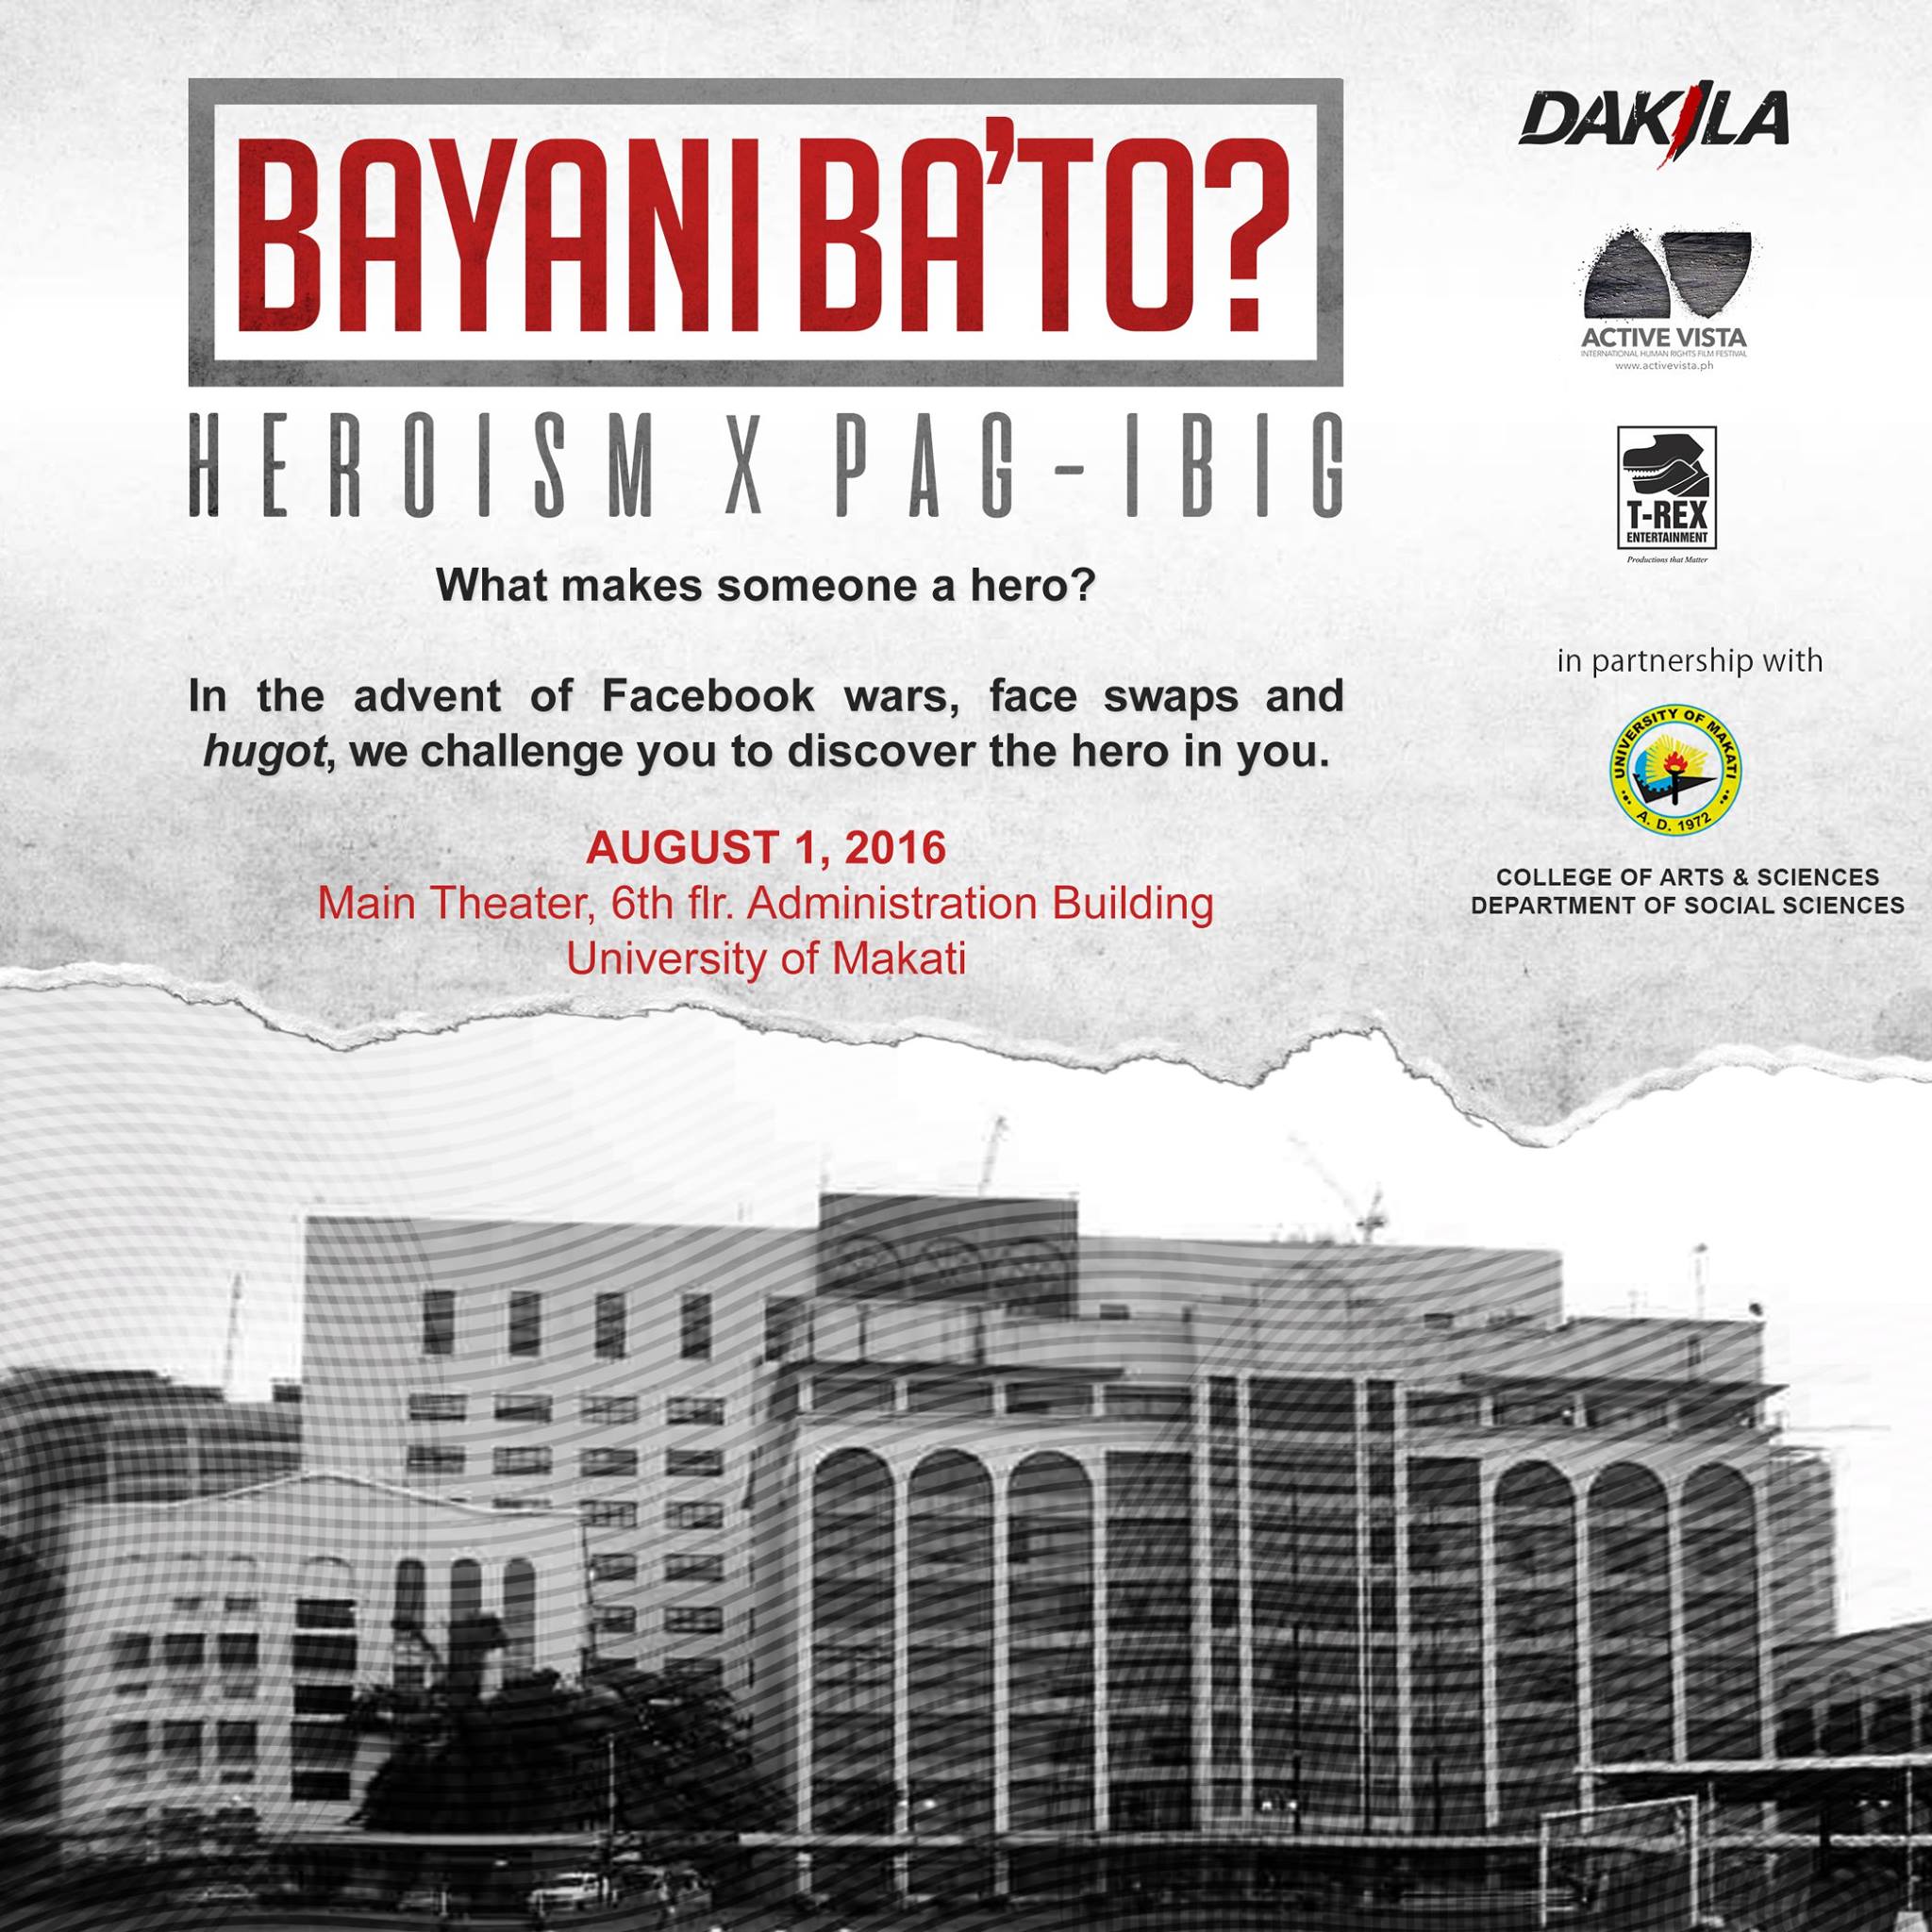 DAKILA Page Liked · 6 hrs · Bayani Ba To: Heroism X Pag-ibig will be at the University of Makati on Monday! See you everyone! Let's keep the conversation going. #BayaniBaTo #MangahasUmibig